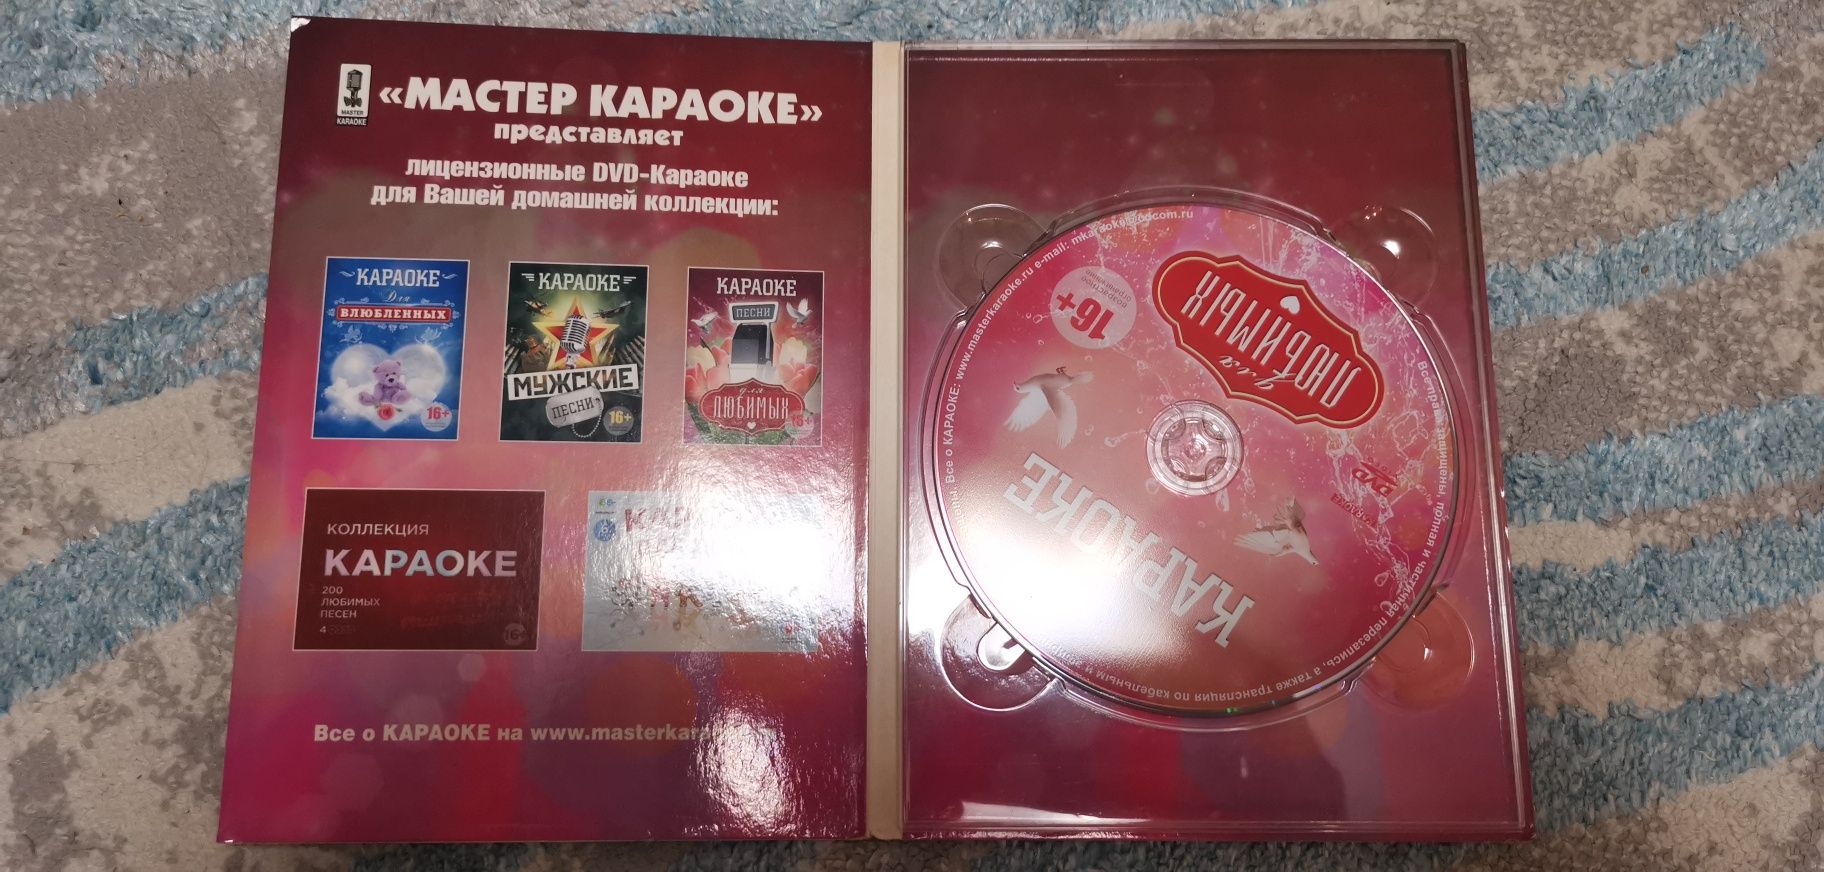 DVD плеер с функцией караоке